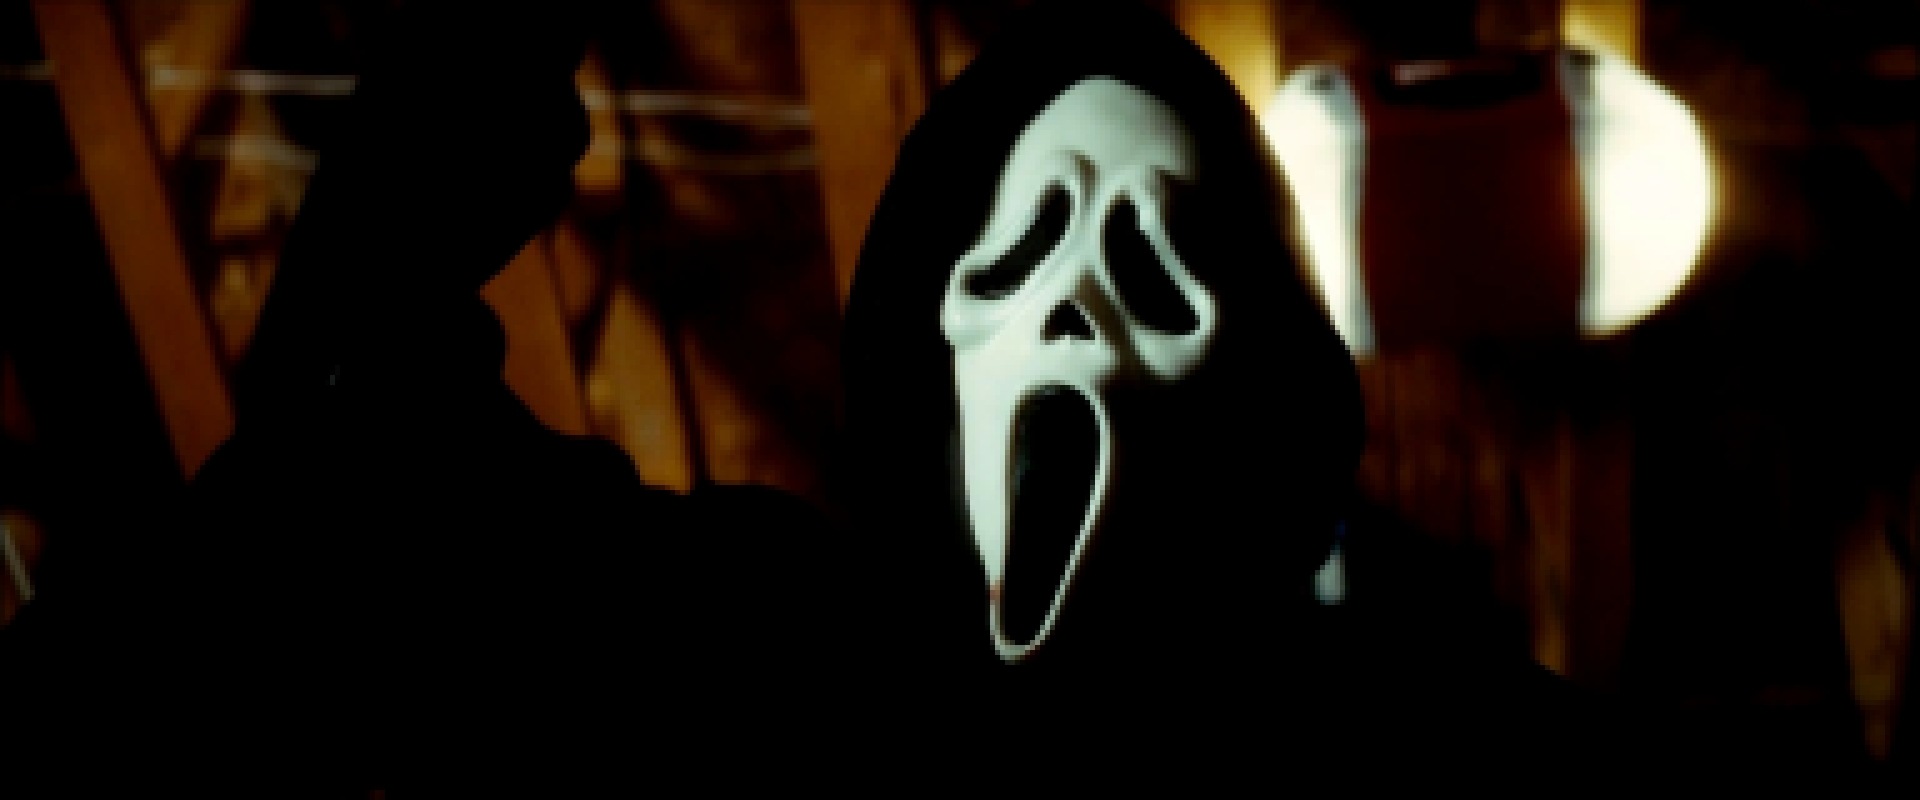 Музыкальный видеоклип Крик 4 / Scream 4 (2011) 